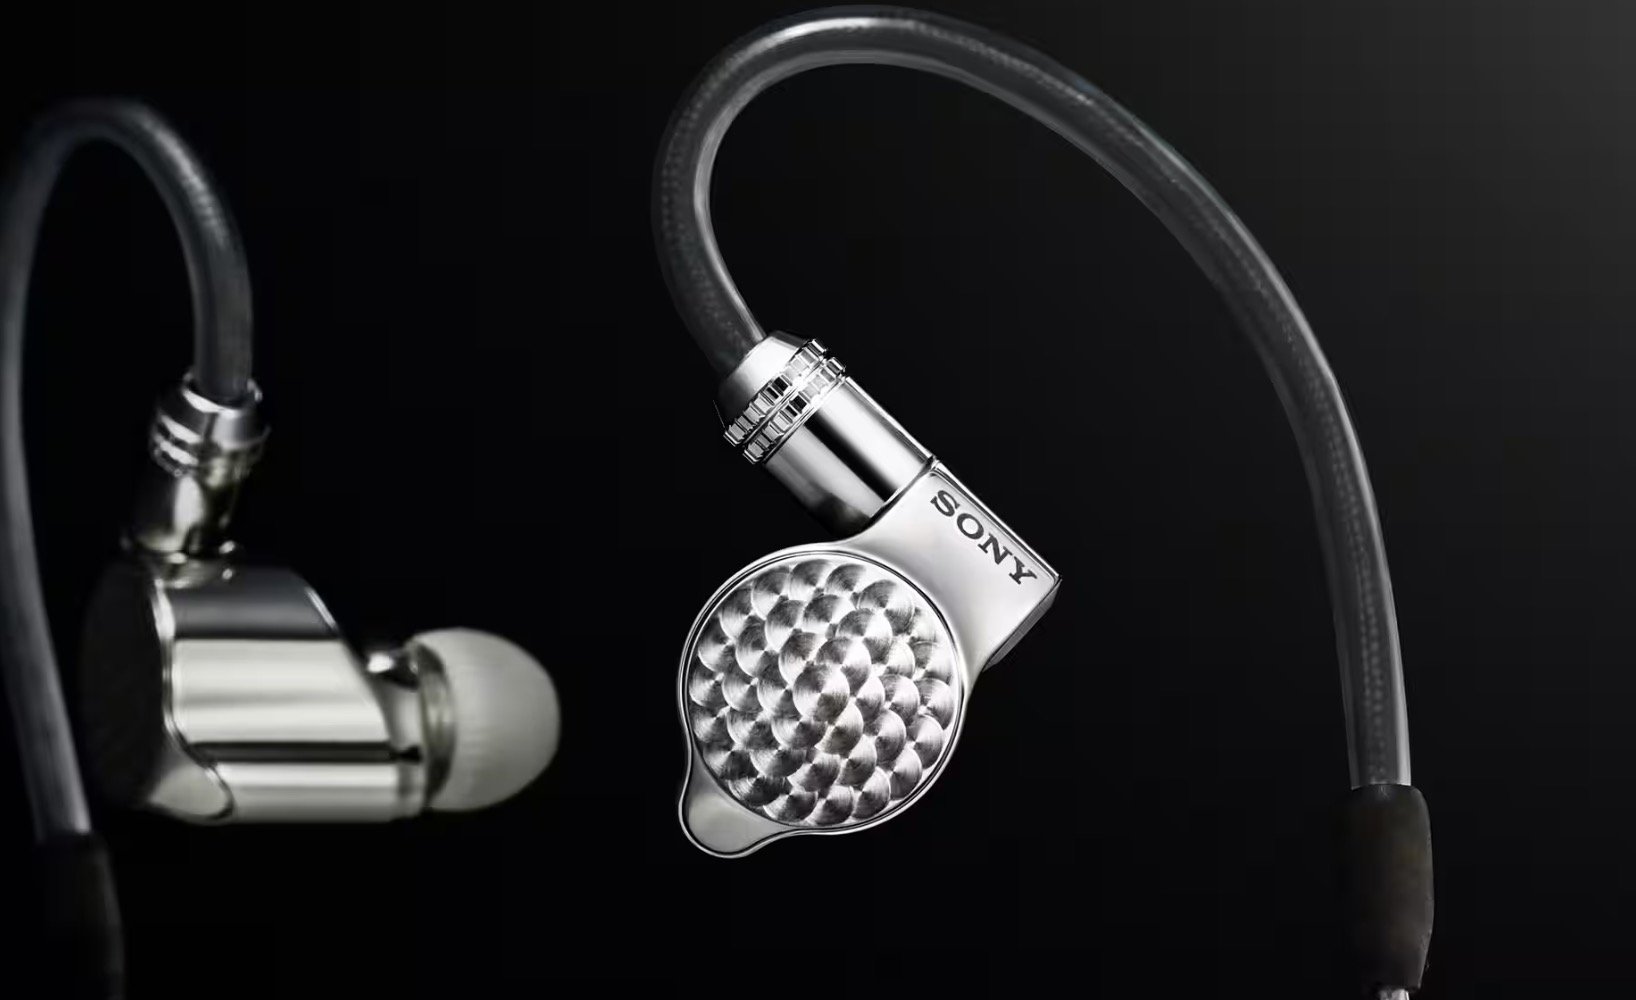 Review: Sony IER-Z1R In-Ear Headphones - An Auditory Masterpiece